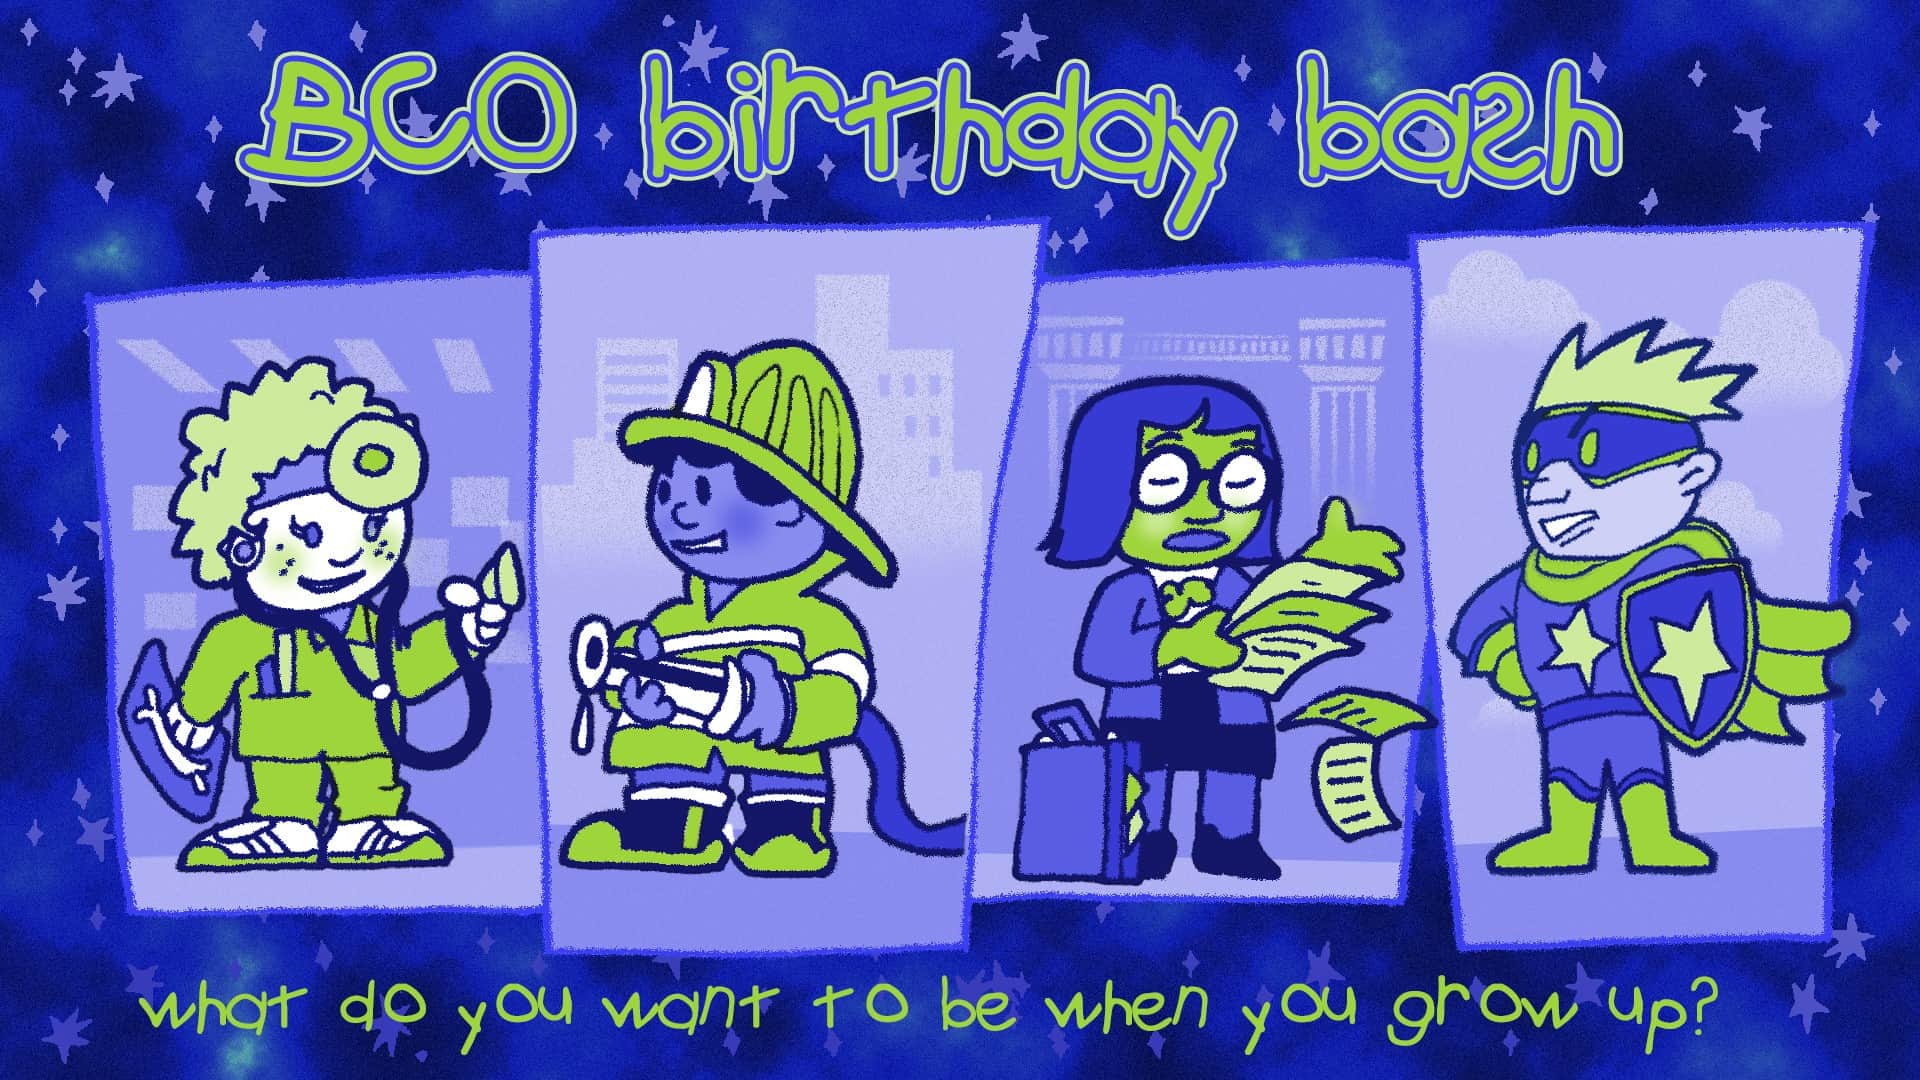 BCO birthday bash